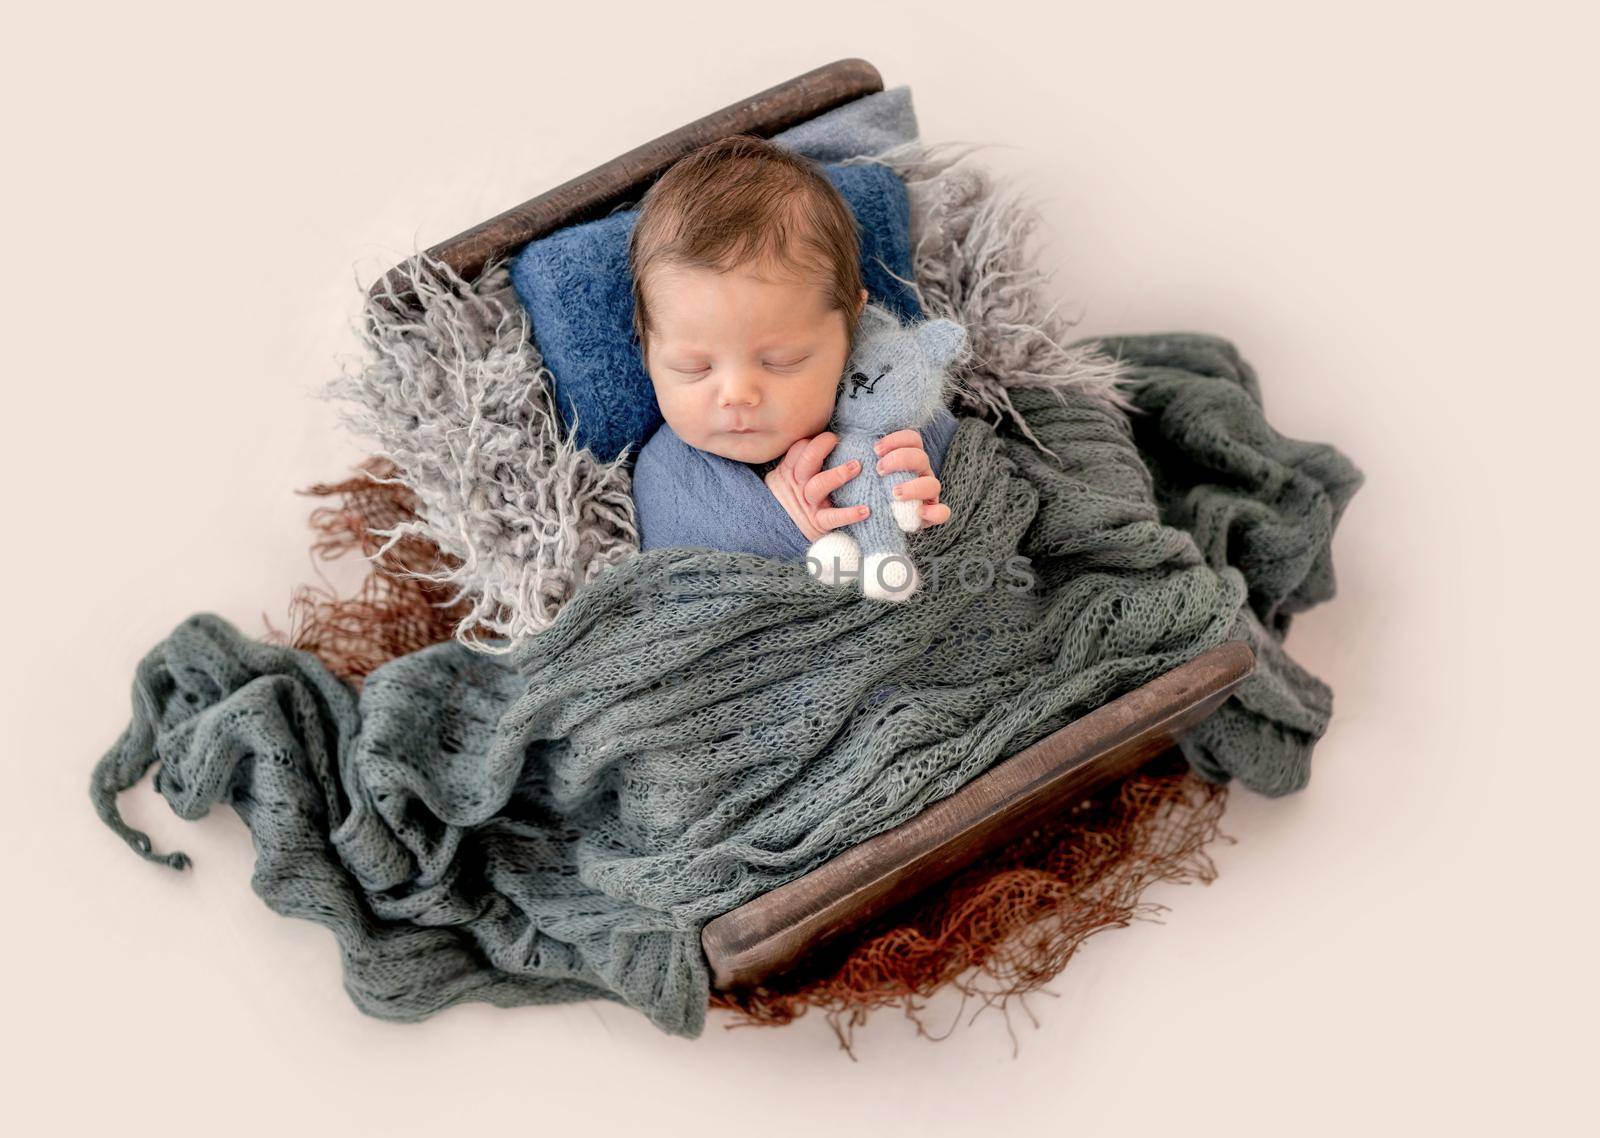 Newborn baby boy portrait by tan4ikk1